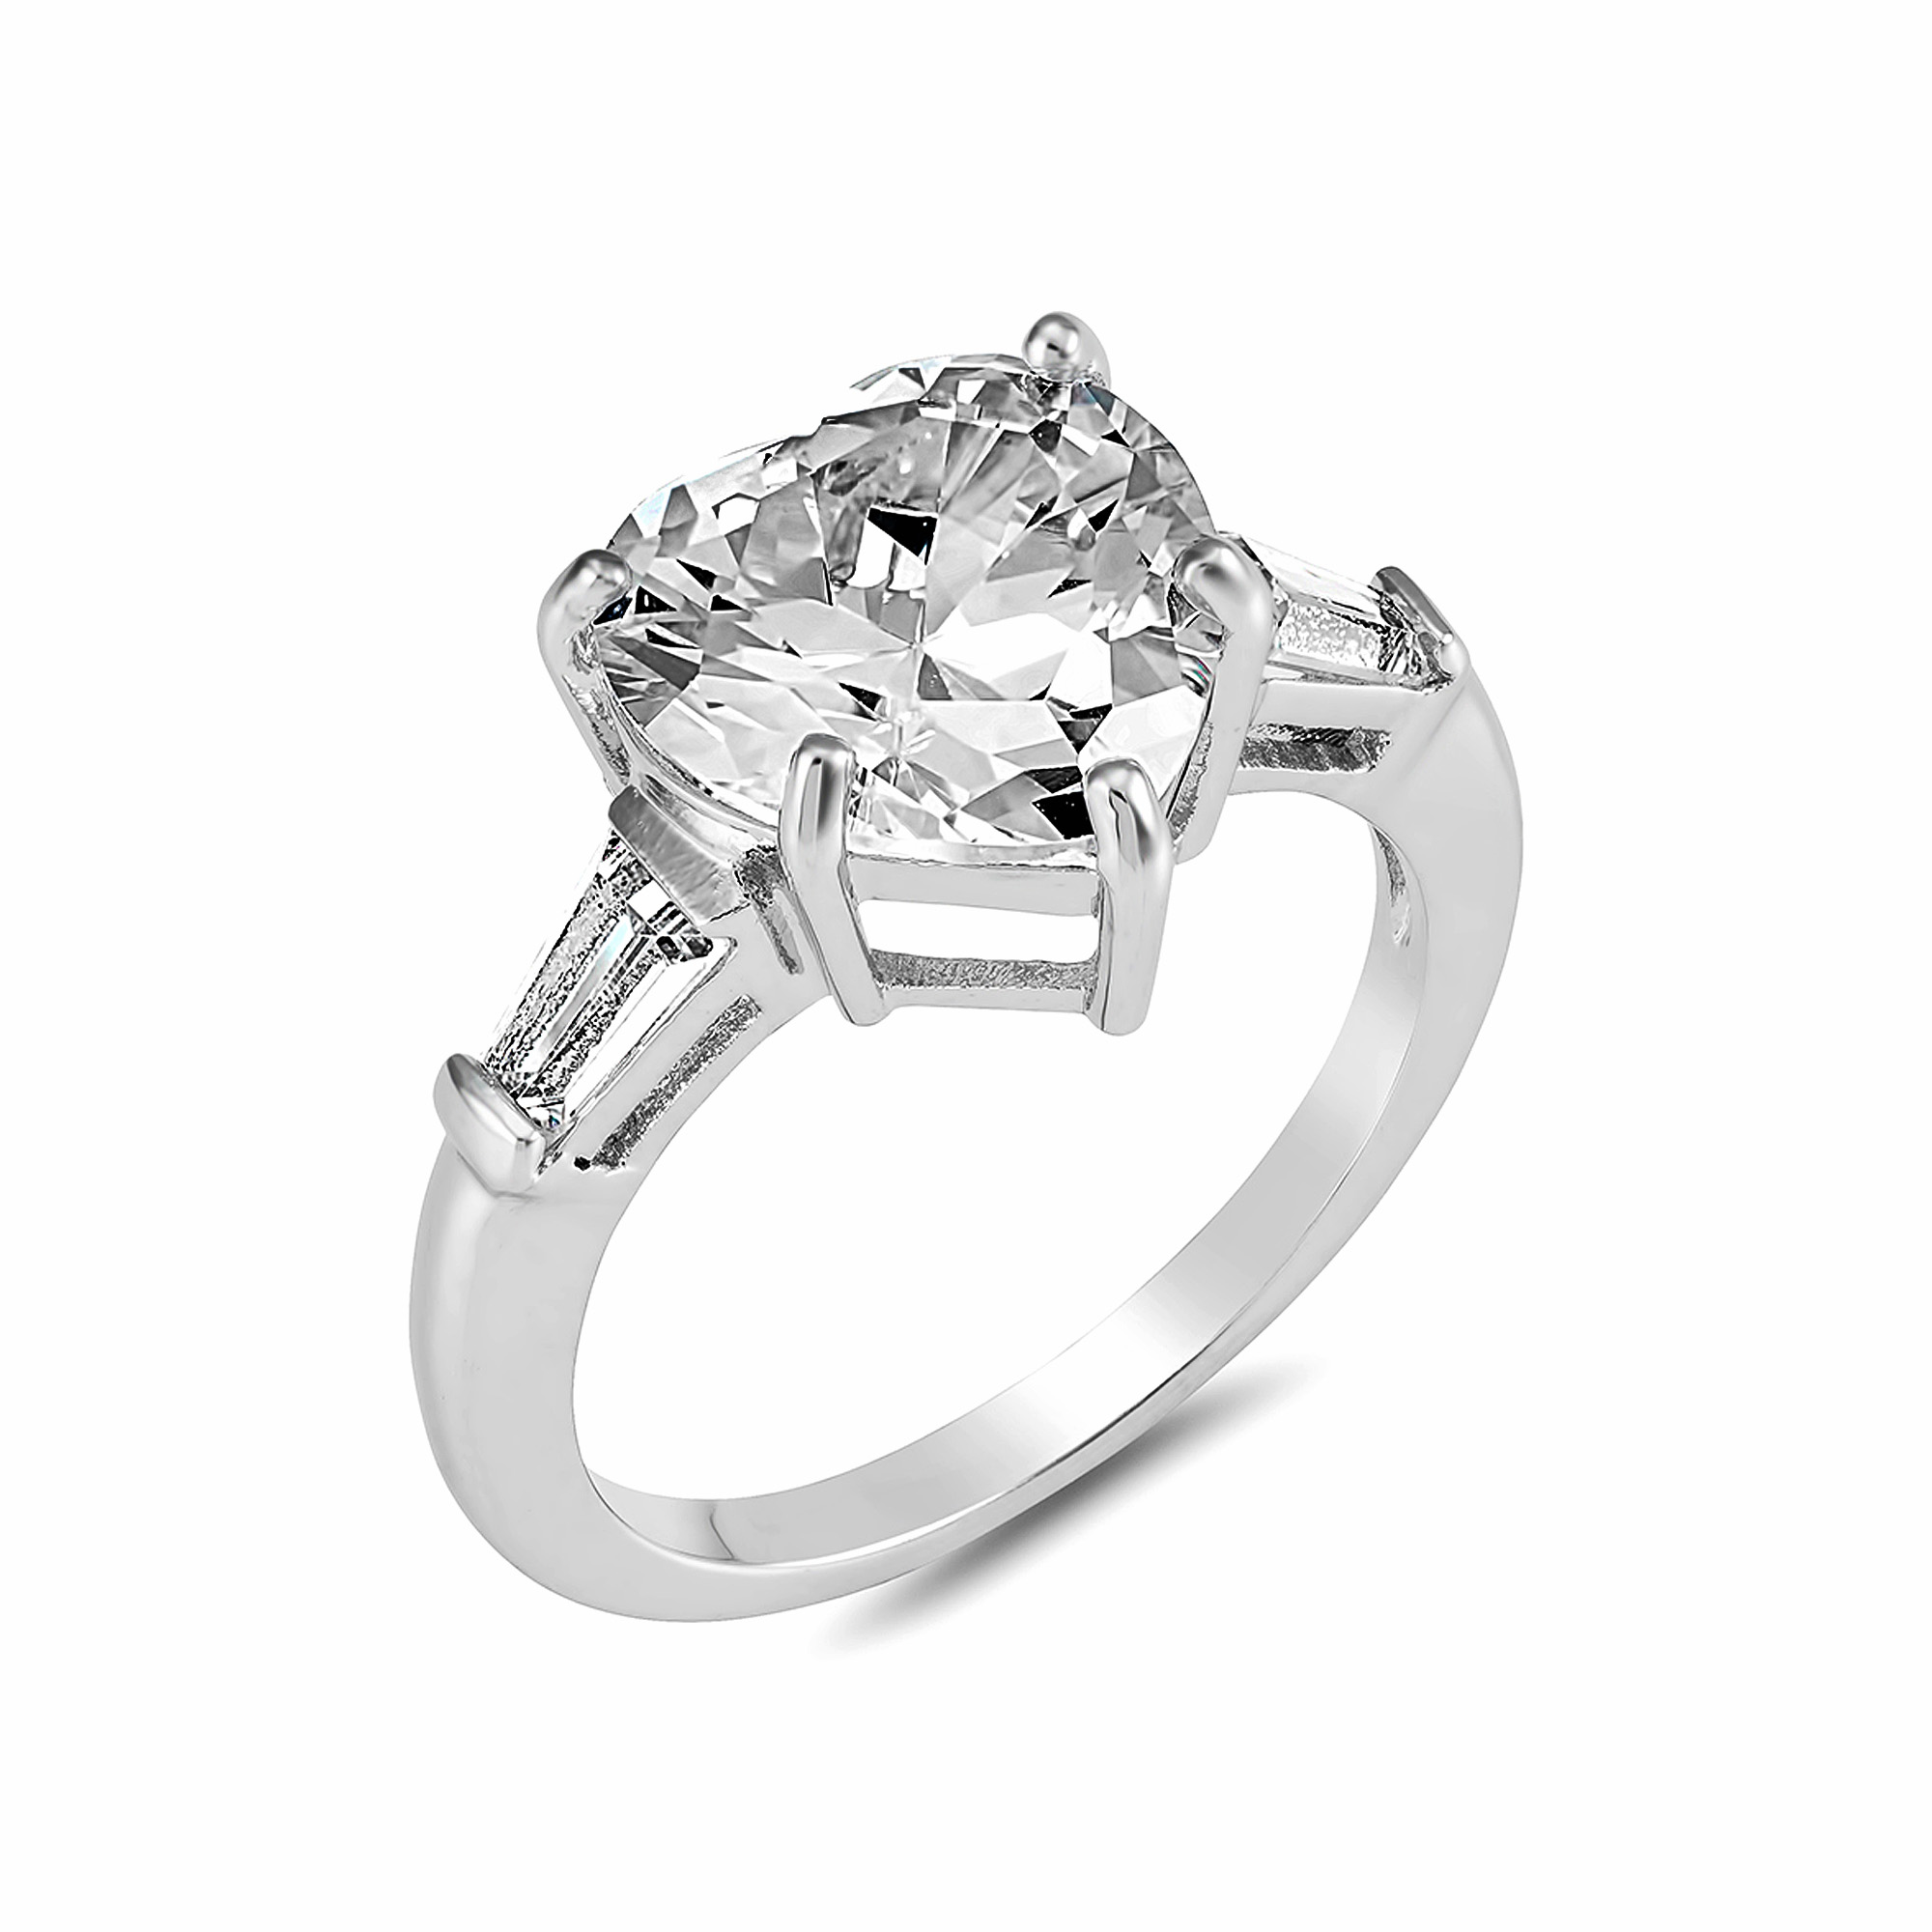 20 x Crystal Angel Heart Ring (4 Sizes, 5 Rings Per Size) Sizes K, M, P, R l UK SELLER l GCJ029